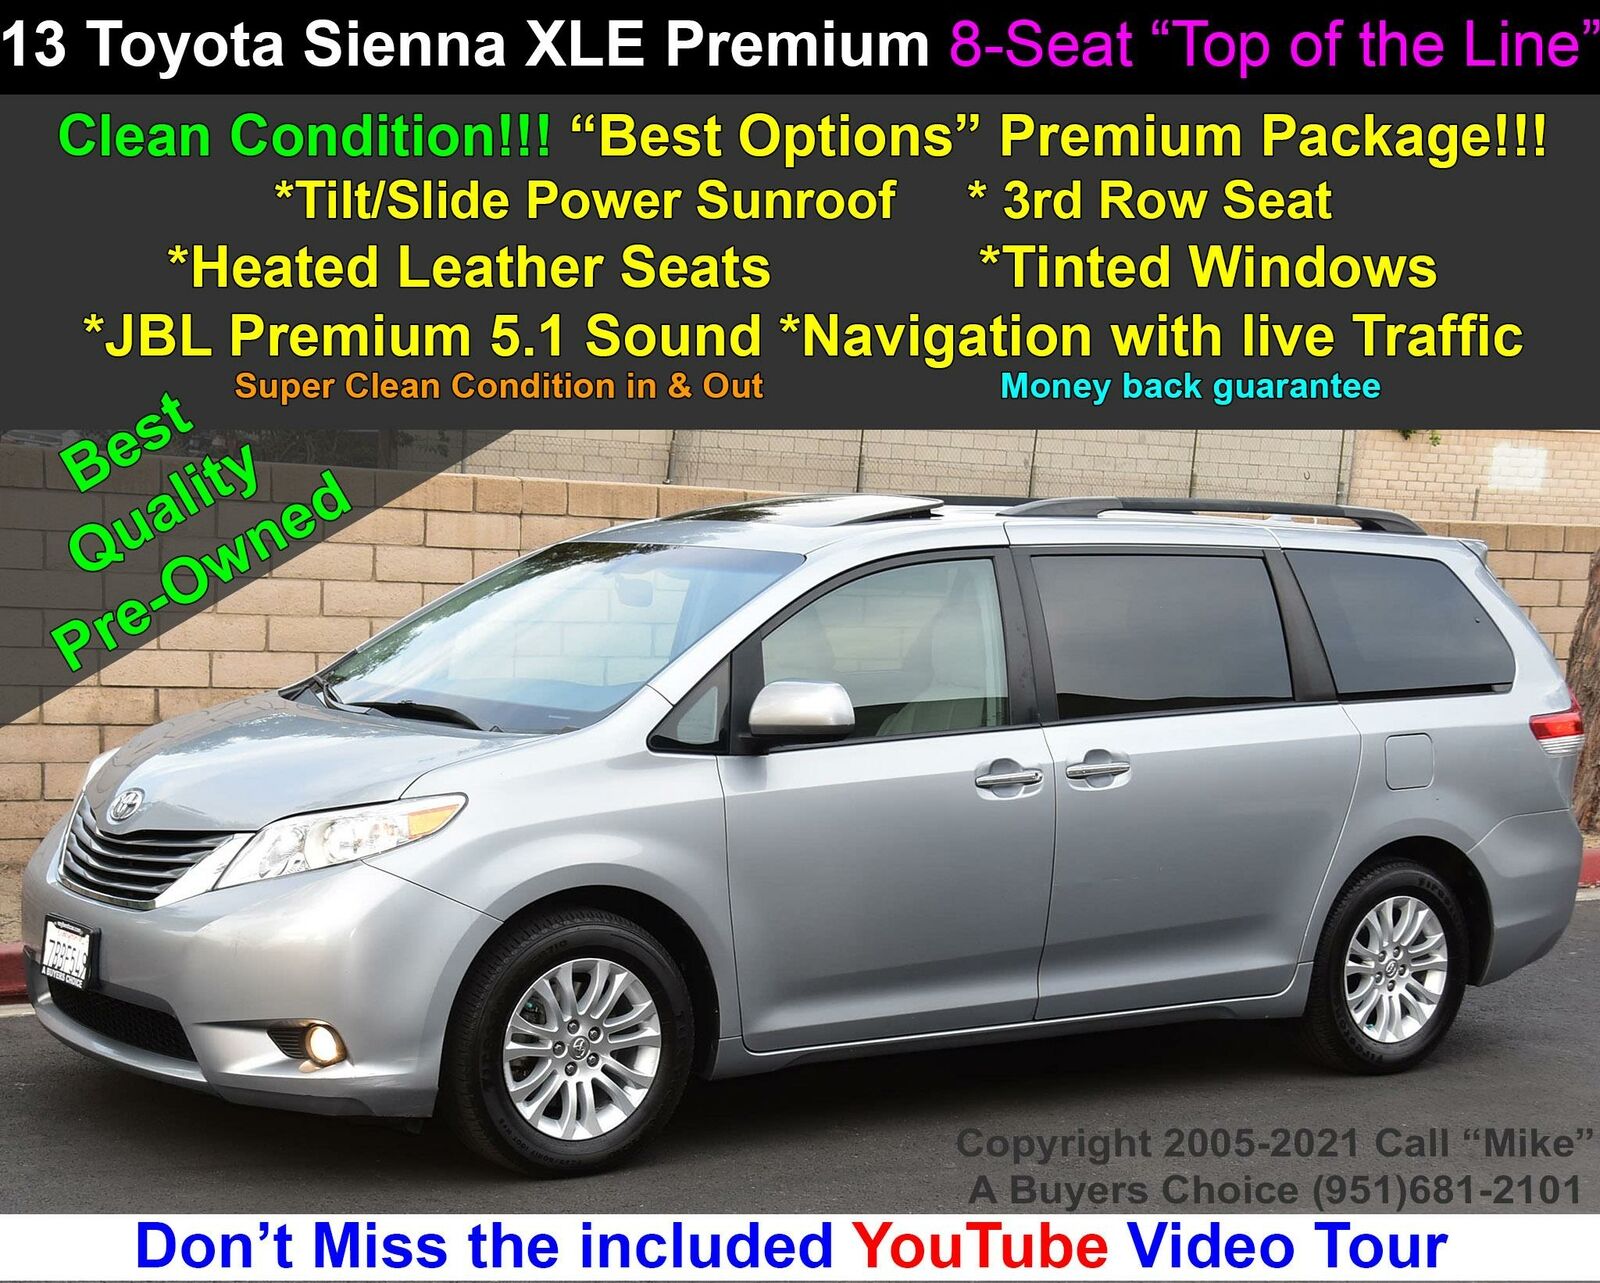 2013 Toyota Sienna Xle Premium  8 Seat Van 2013 Toyota Sienna Xle Premium  8 Seat Van Light Silverextra-clean!